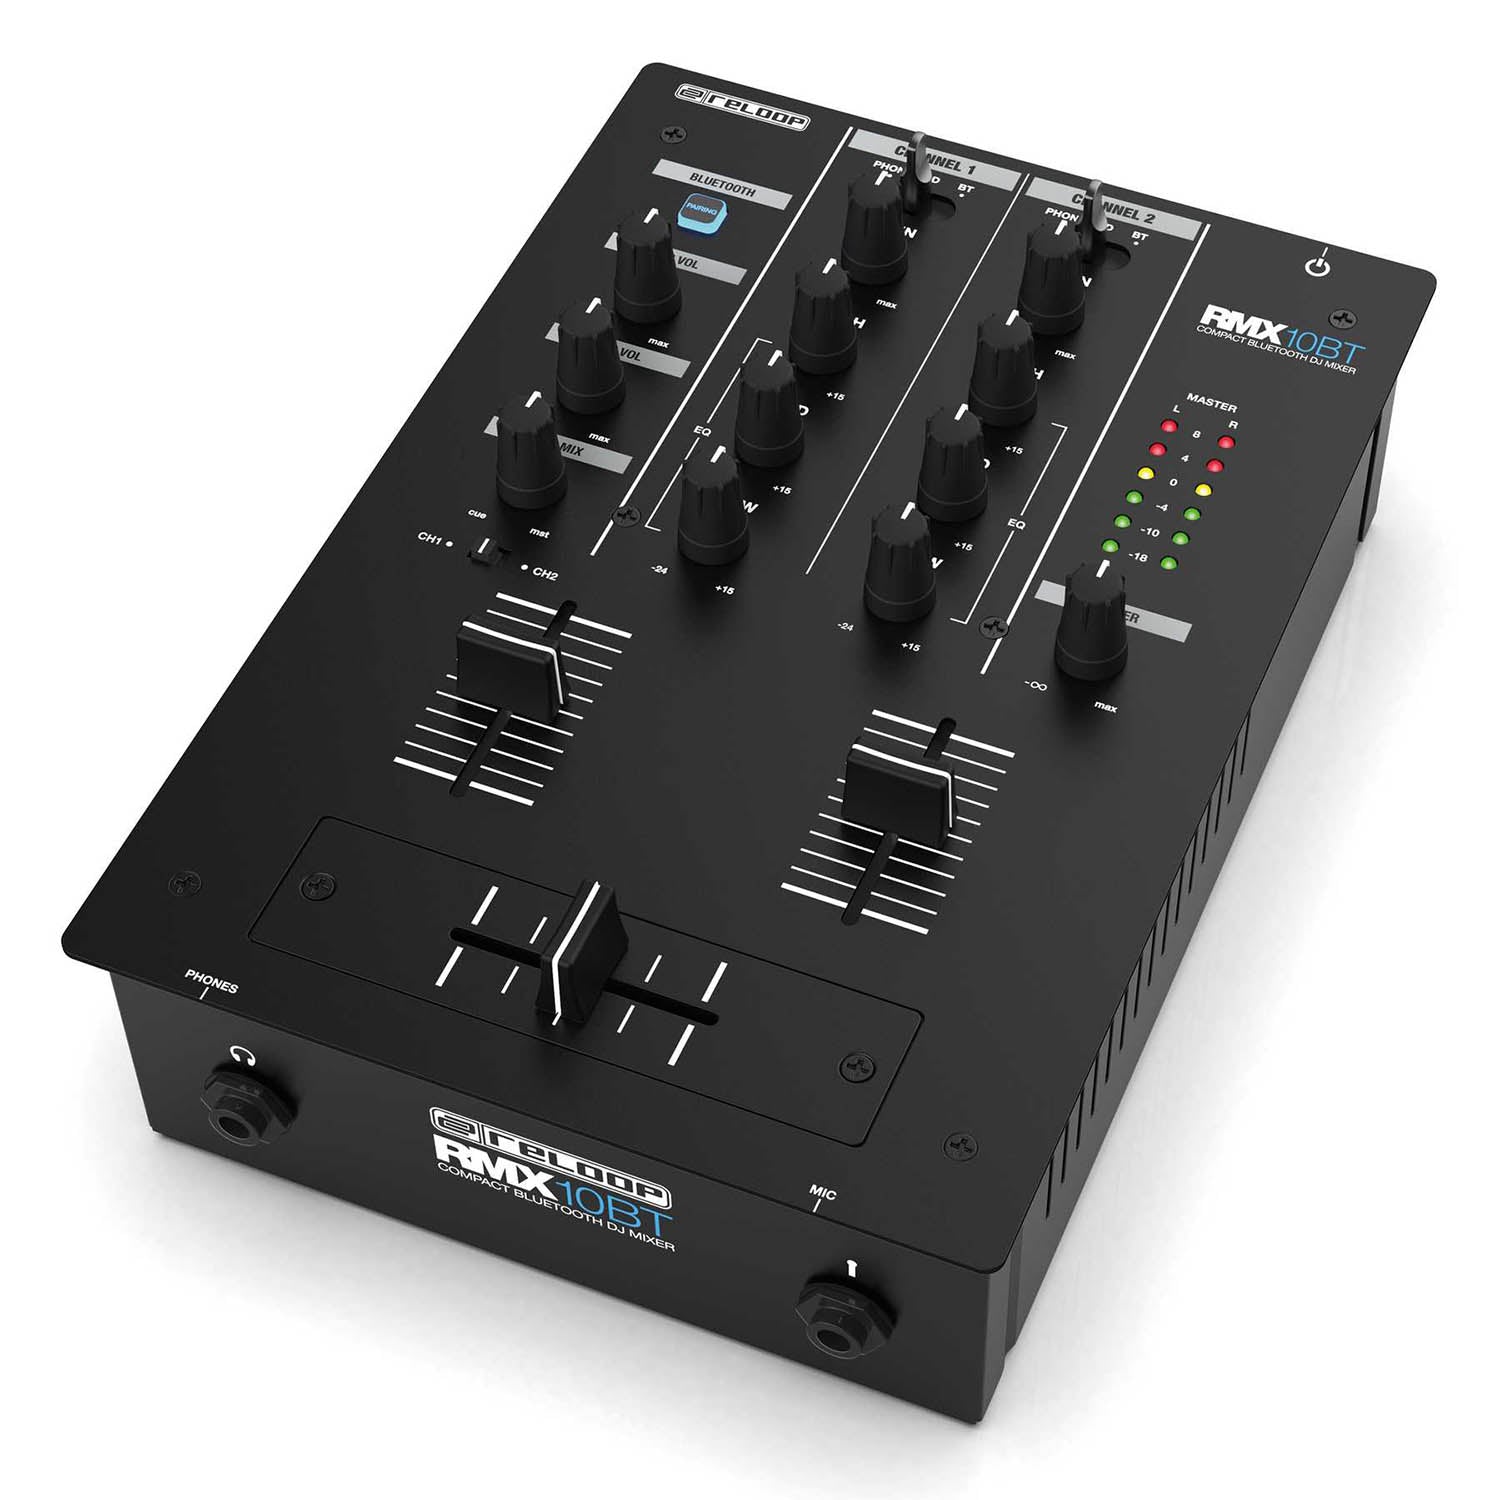 Reloop RMX-10-BT 2-Channel Bluetooth Dj Mixer In Compact Design - Hollywood DJ